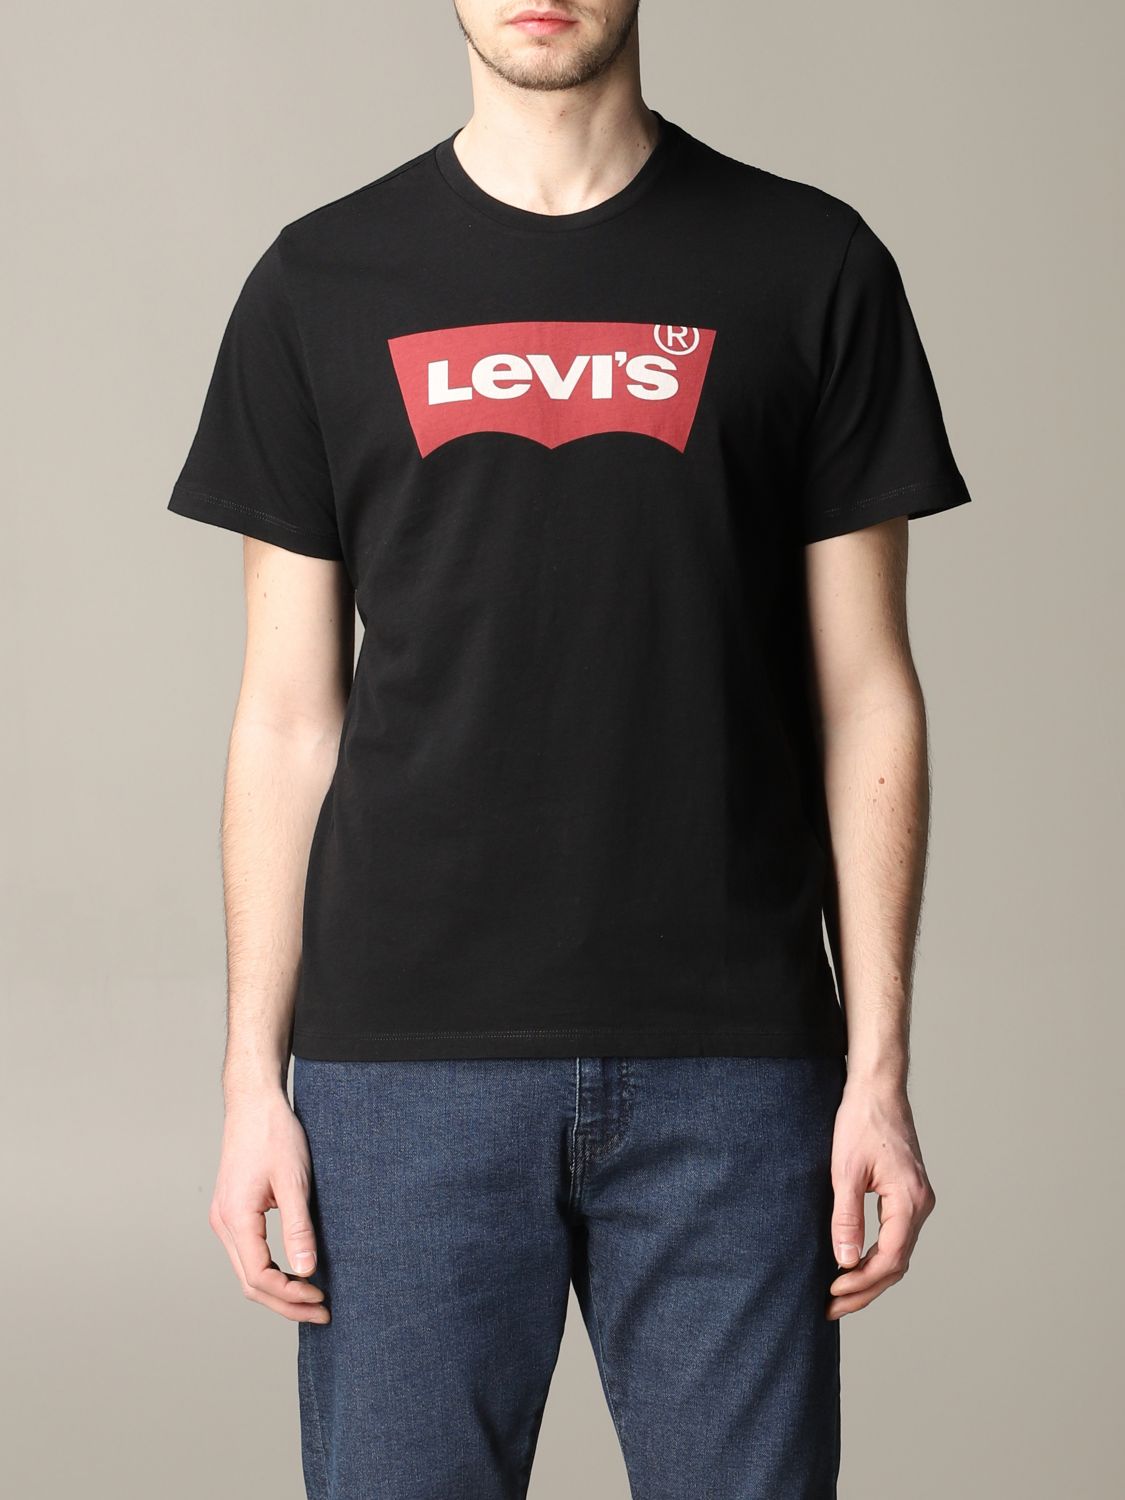 levis black t shirt mens